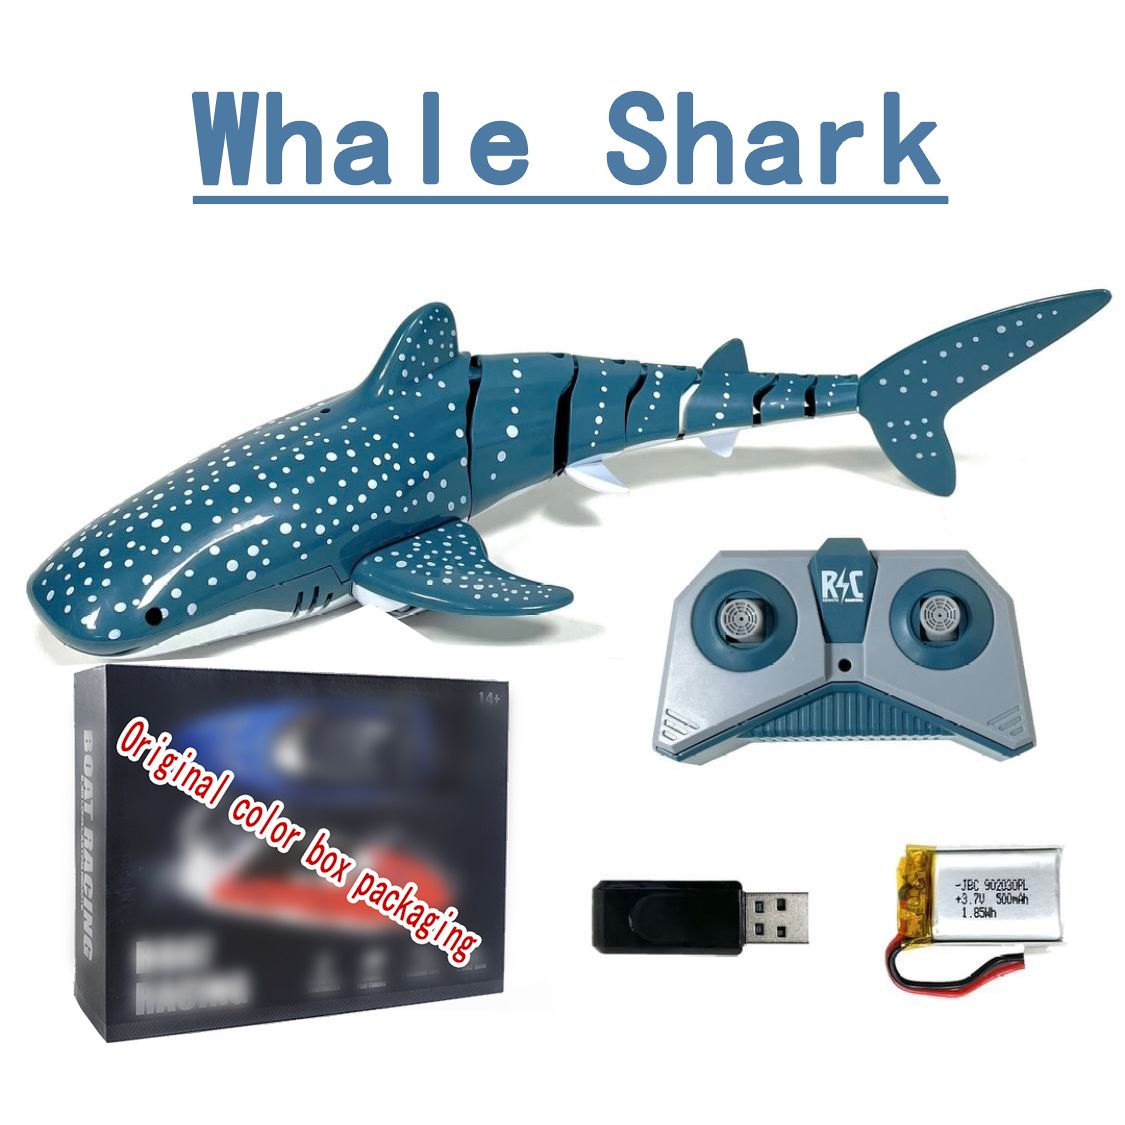 Whale Shark B2